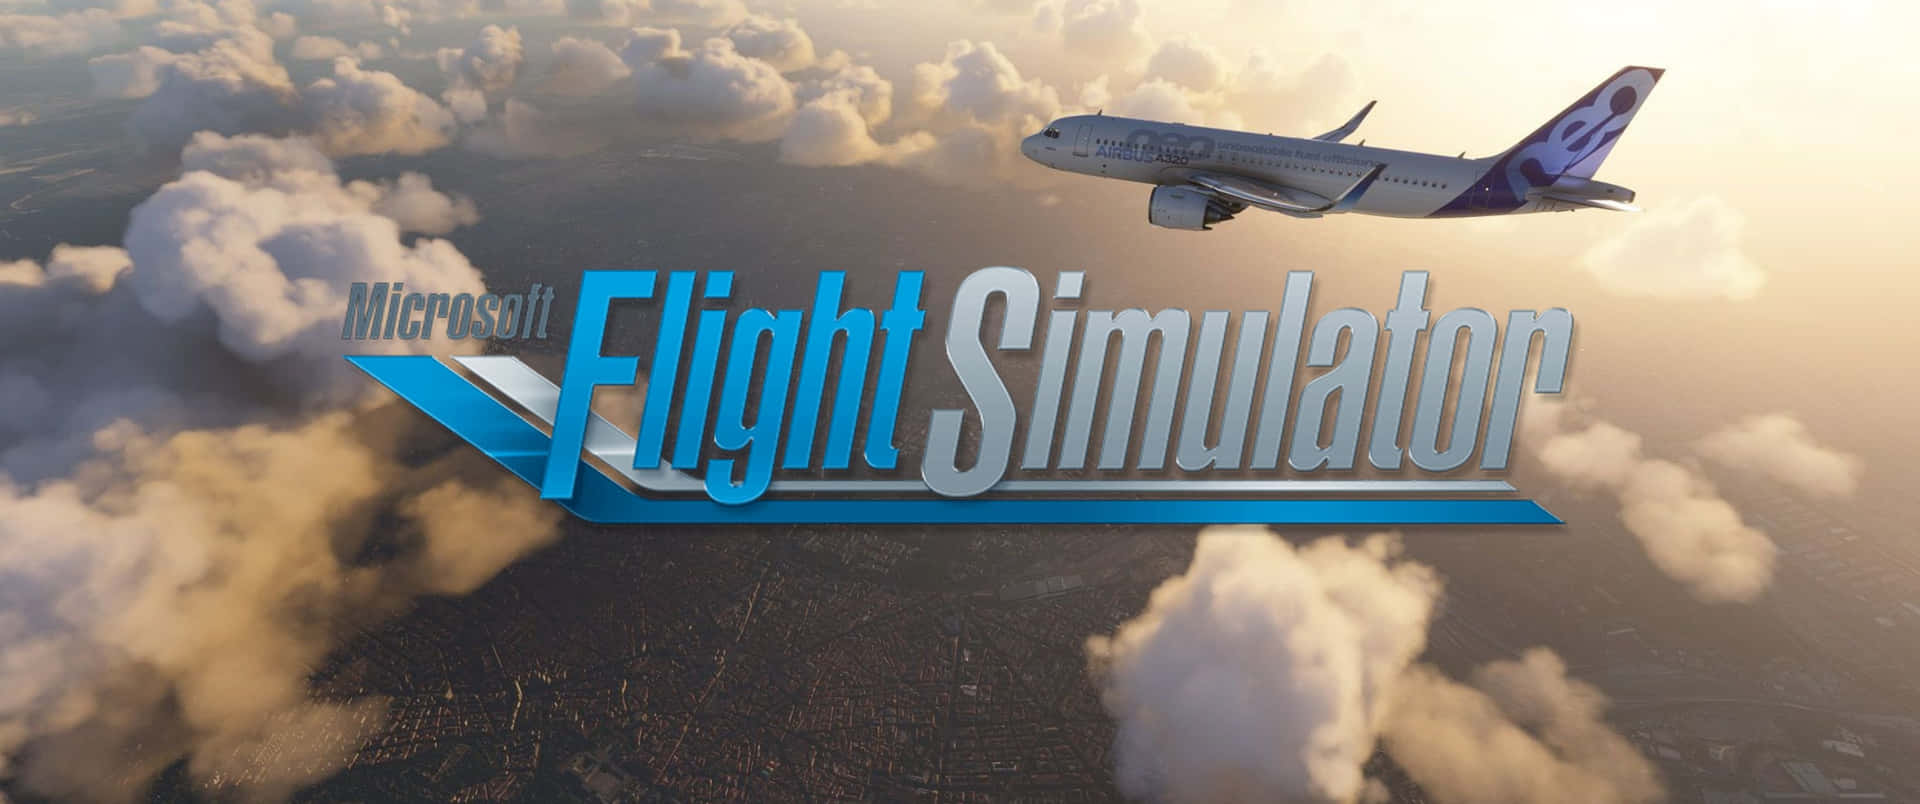 Download 3440x1440p Microsoft Flight Simulator Background 3440 X 1440 ...